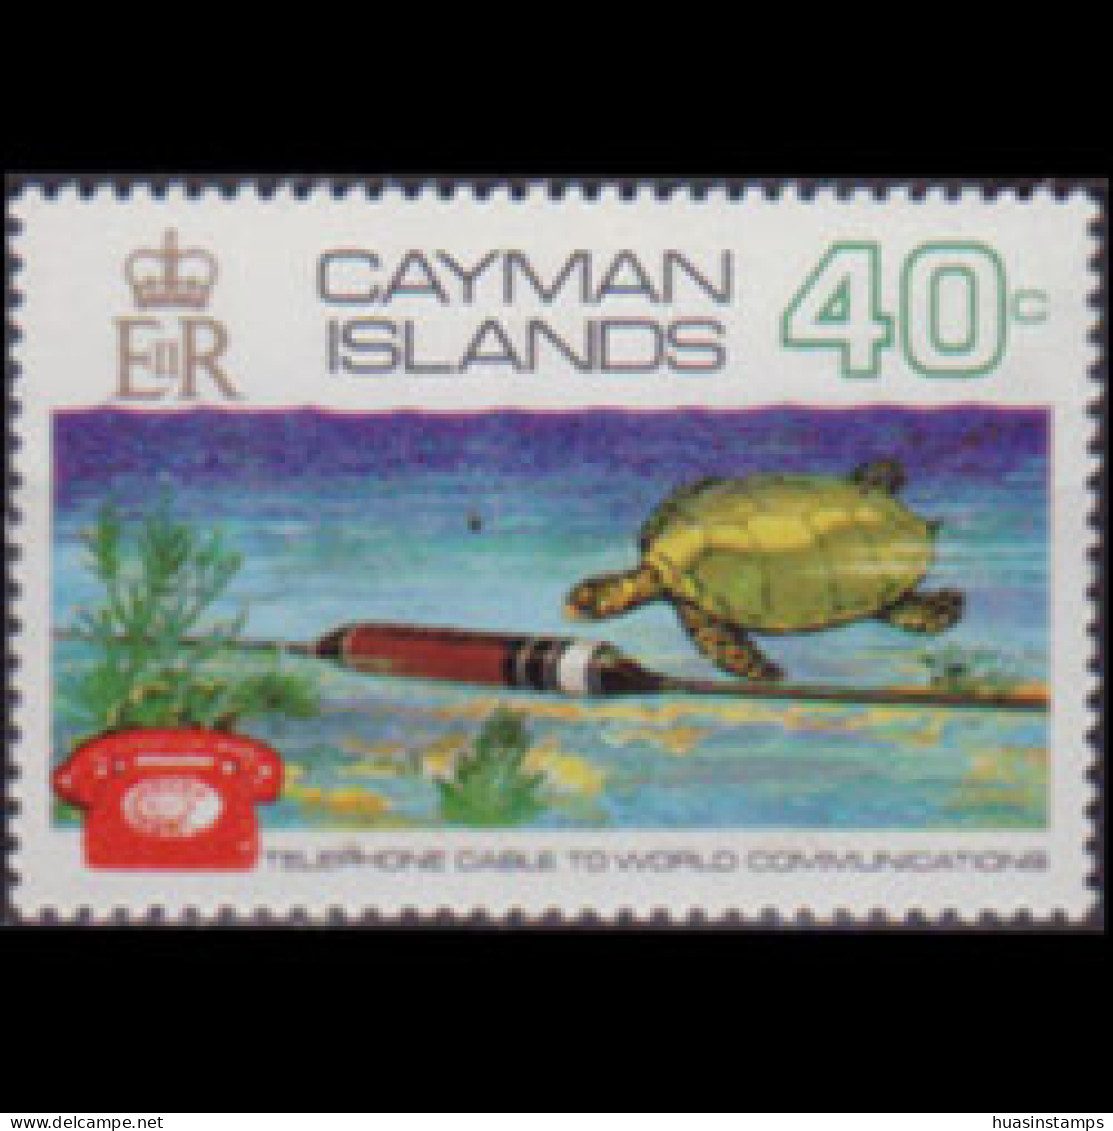 CAYMAN IS. 1972 - Scott# 299 Underwater Cable 40c MNH - Kaimaninseln